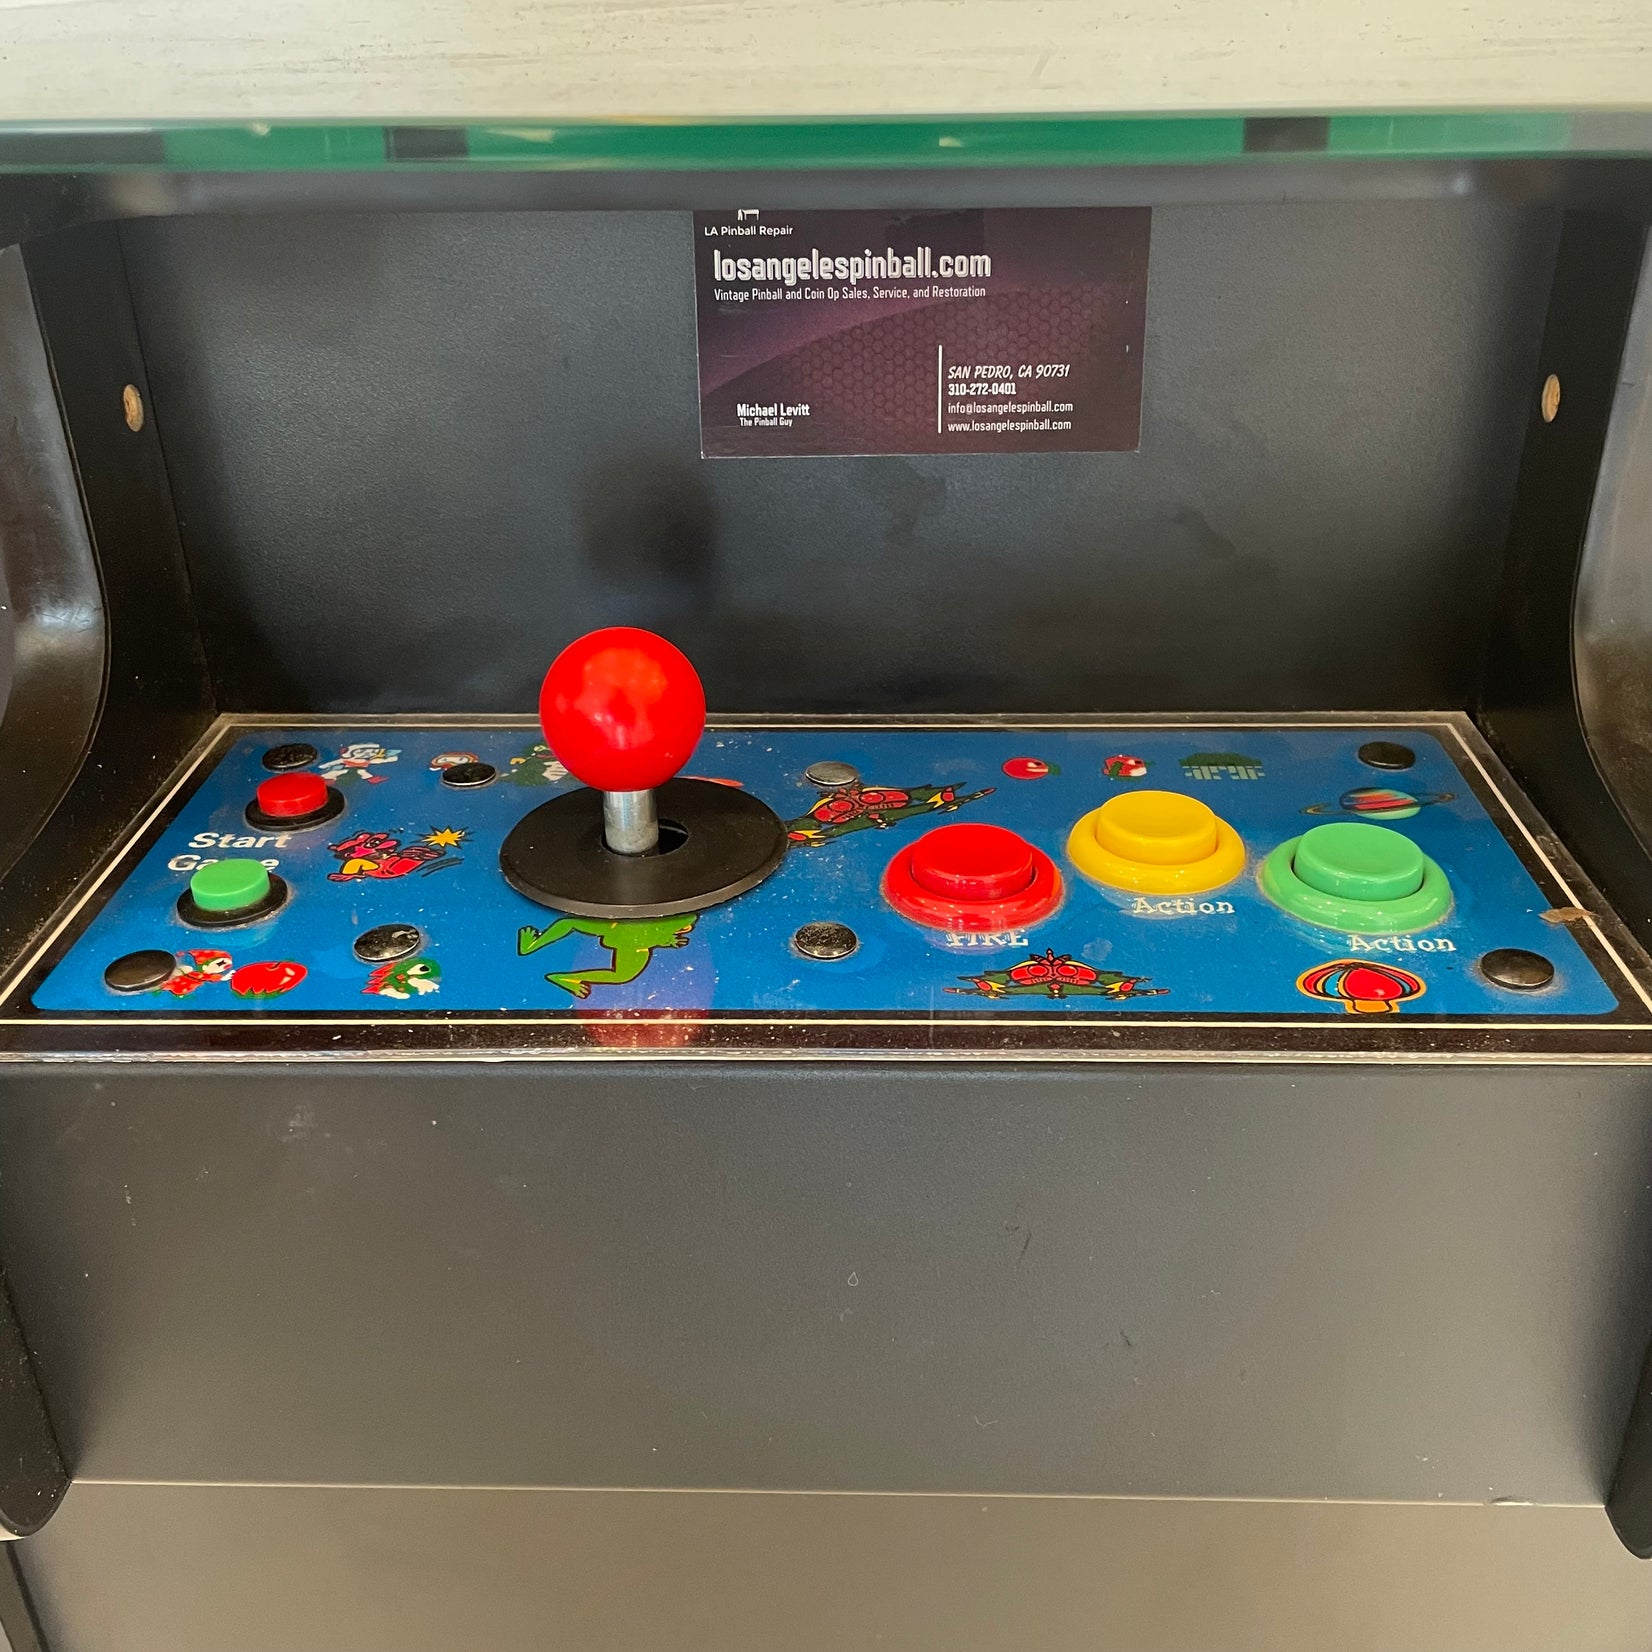 Bally Pac-Man Arcade Game, 1980 USA